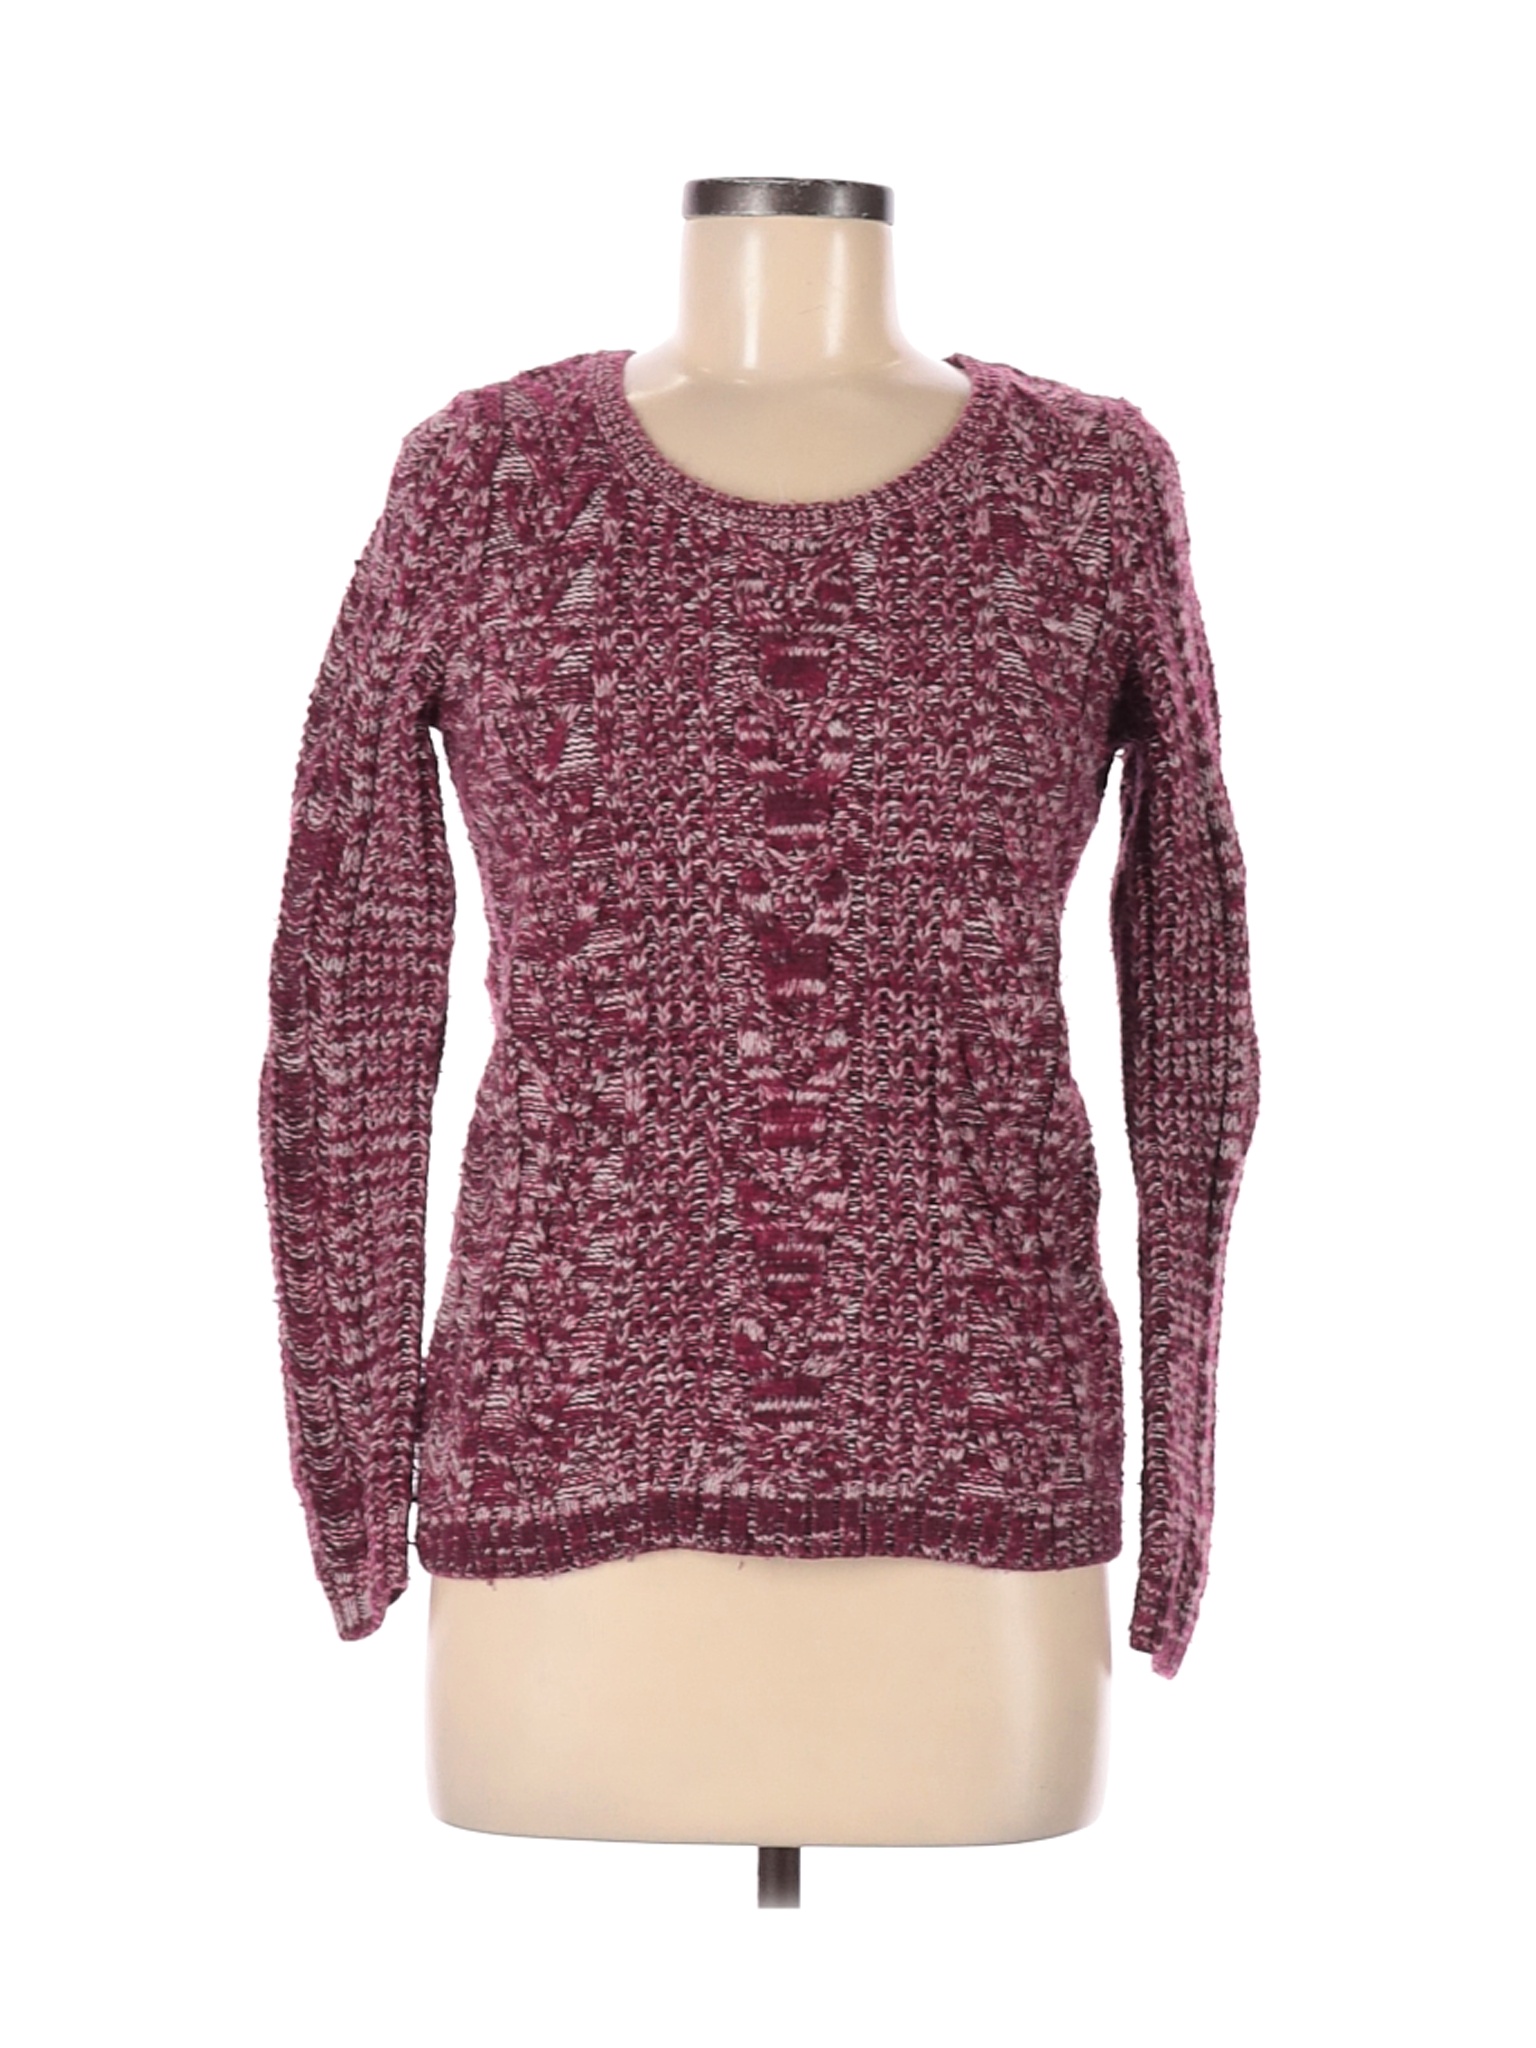 Gap Women Red Pullover Sweater M | eBay